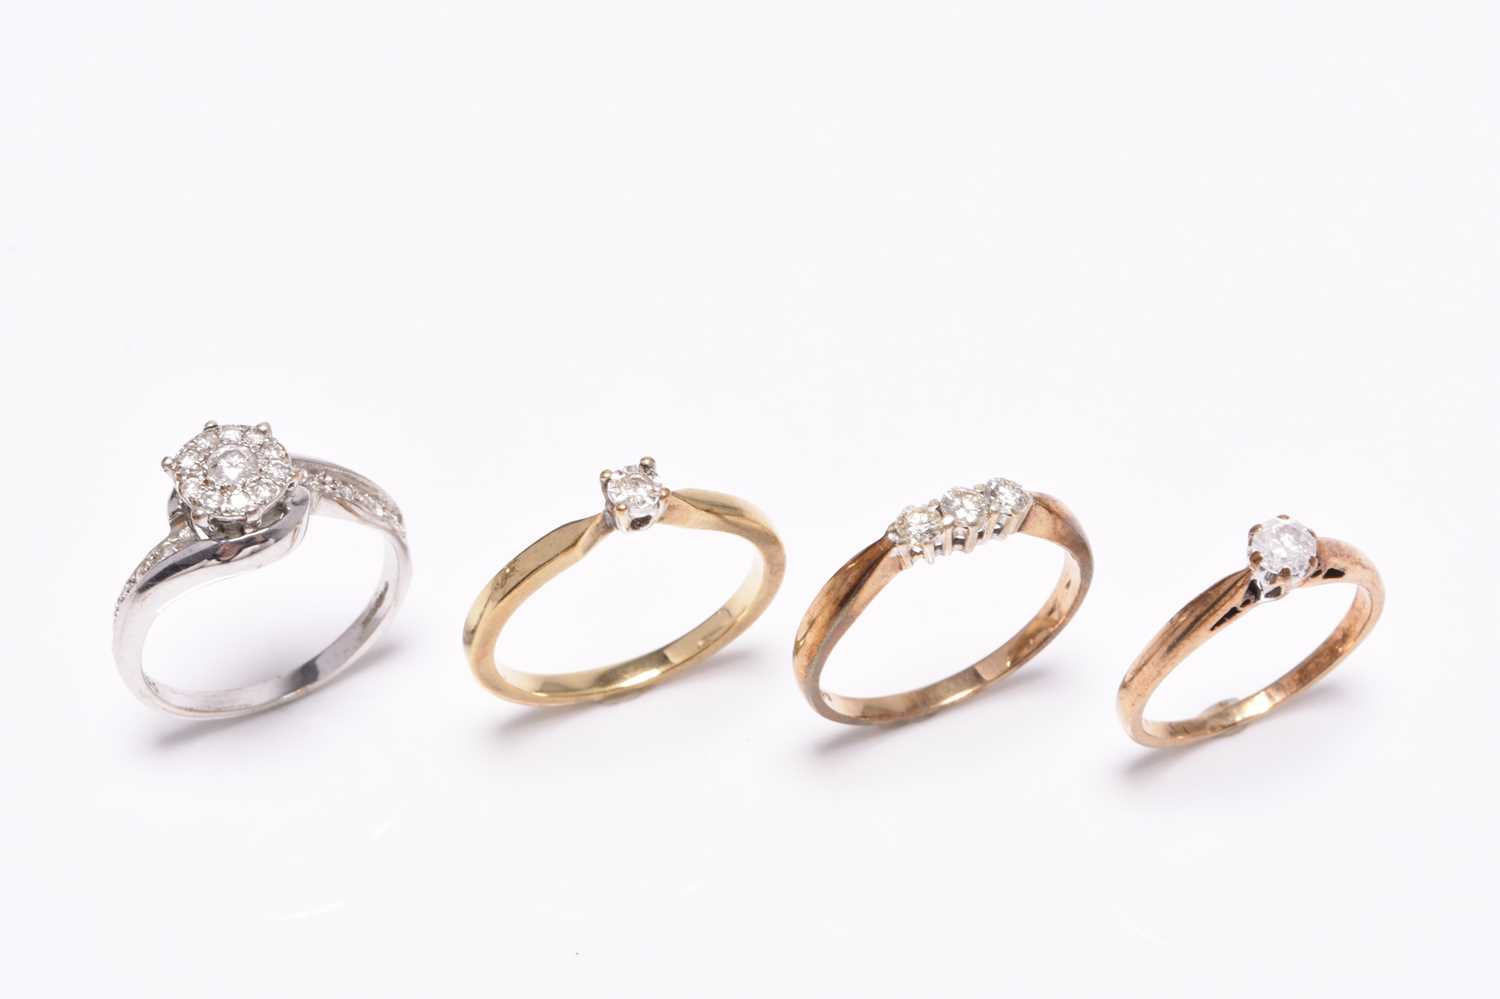 Four 9ct gold diamond set rings